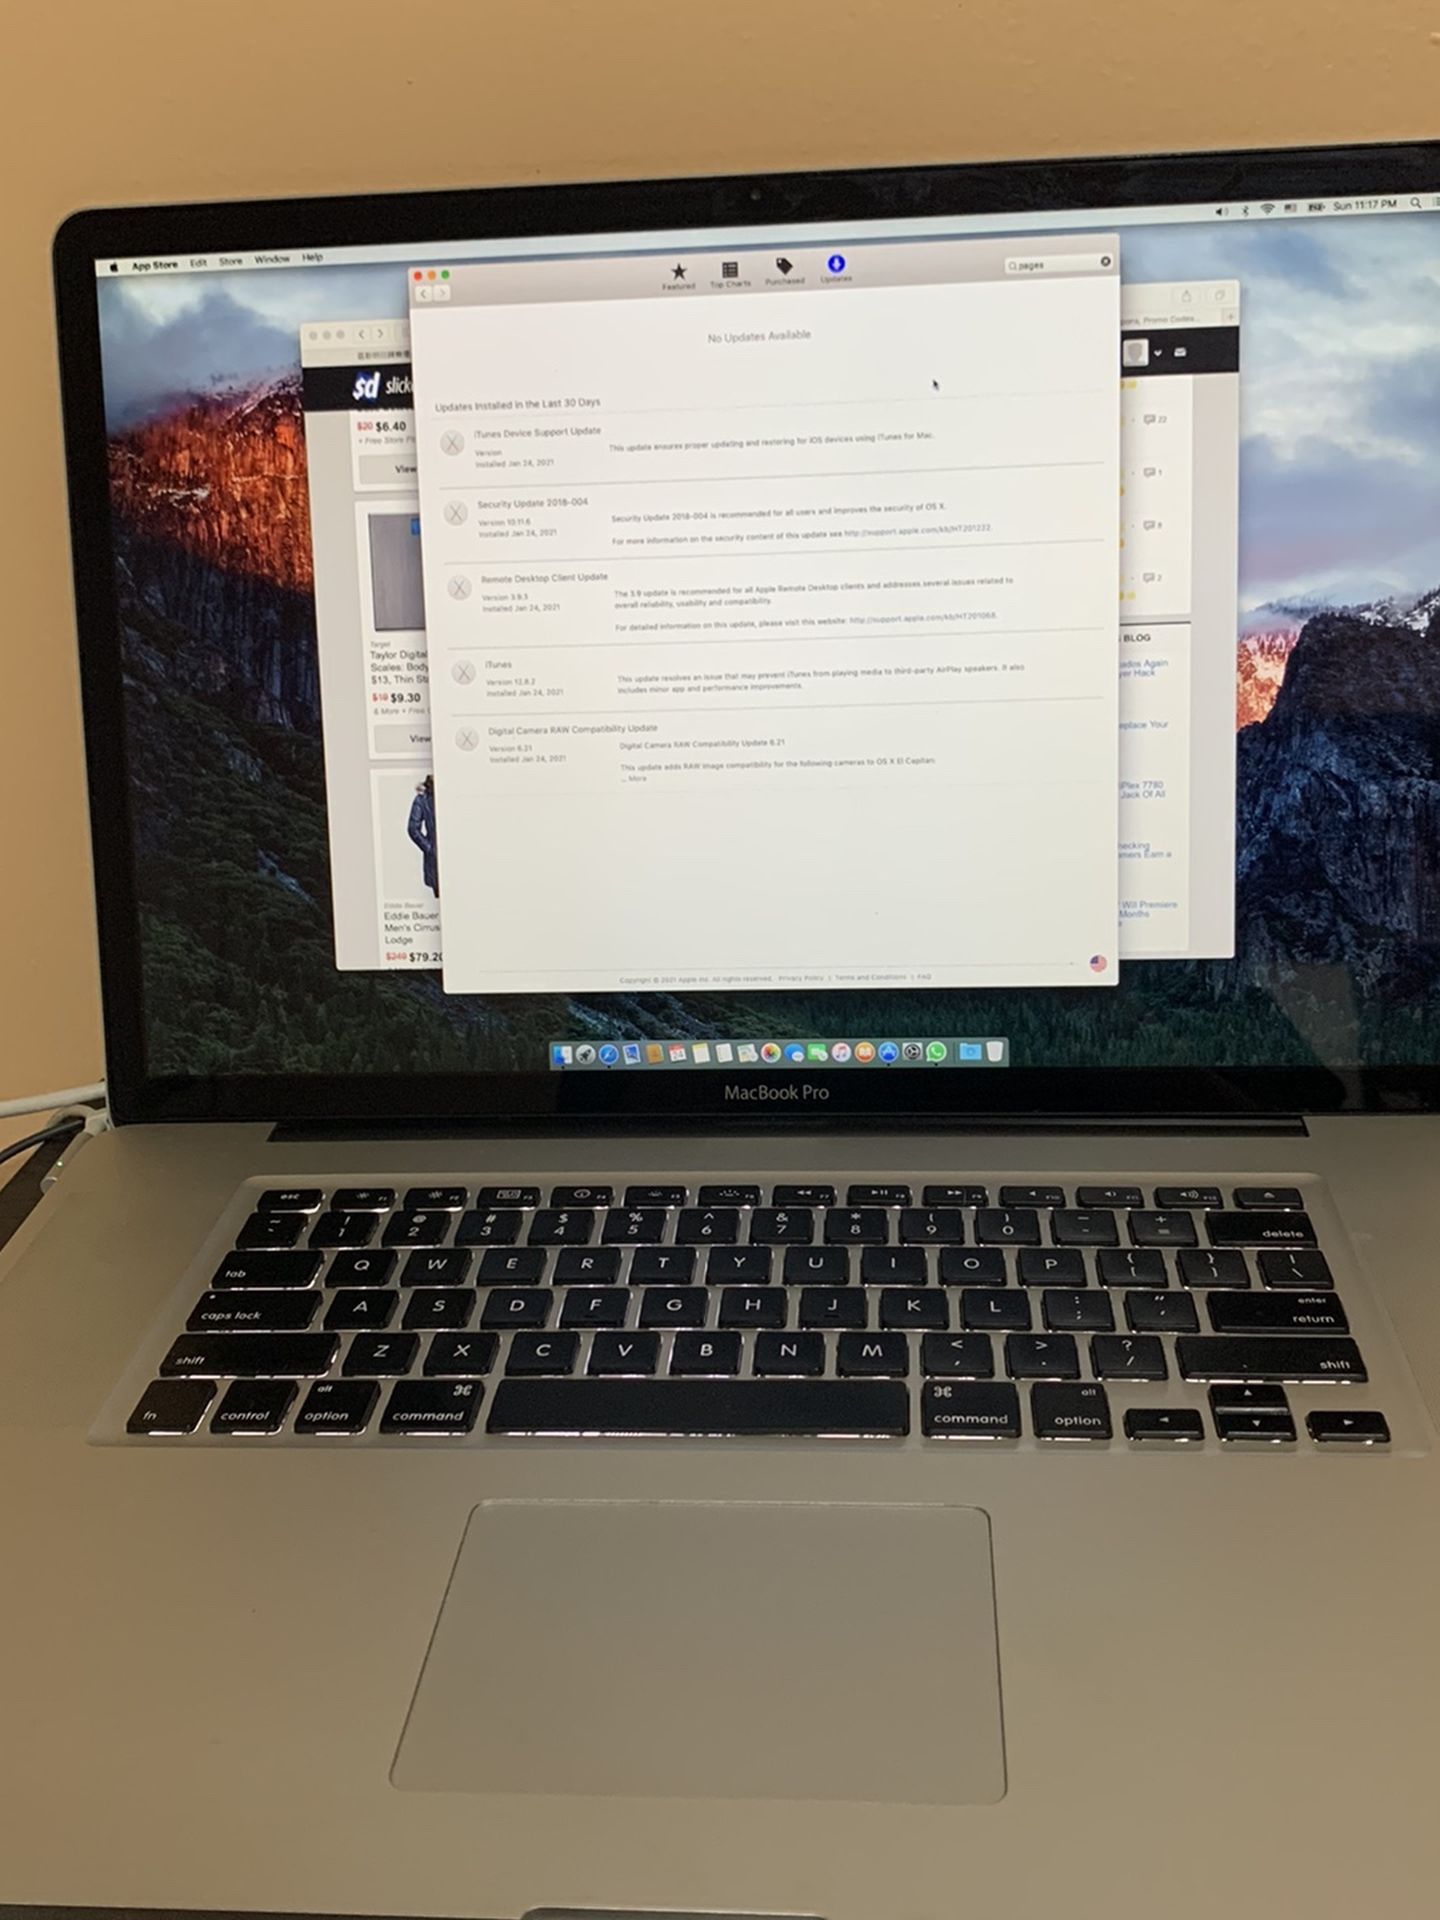 Apple MacBook Pro 17 Inch 2.93ghz